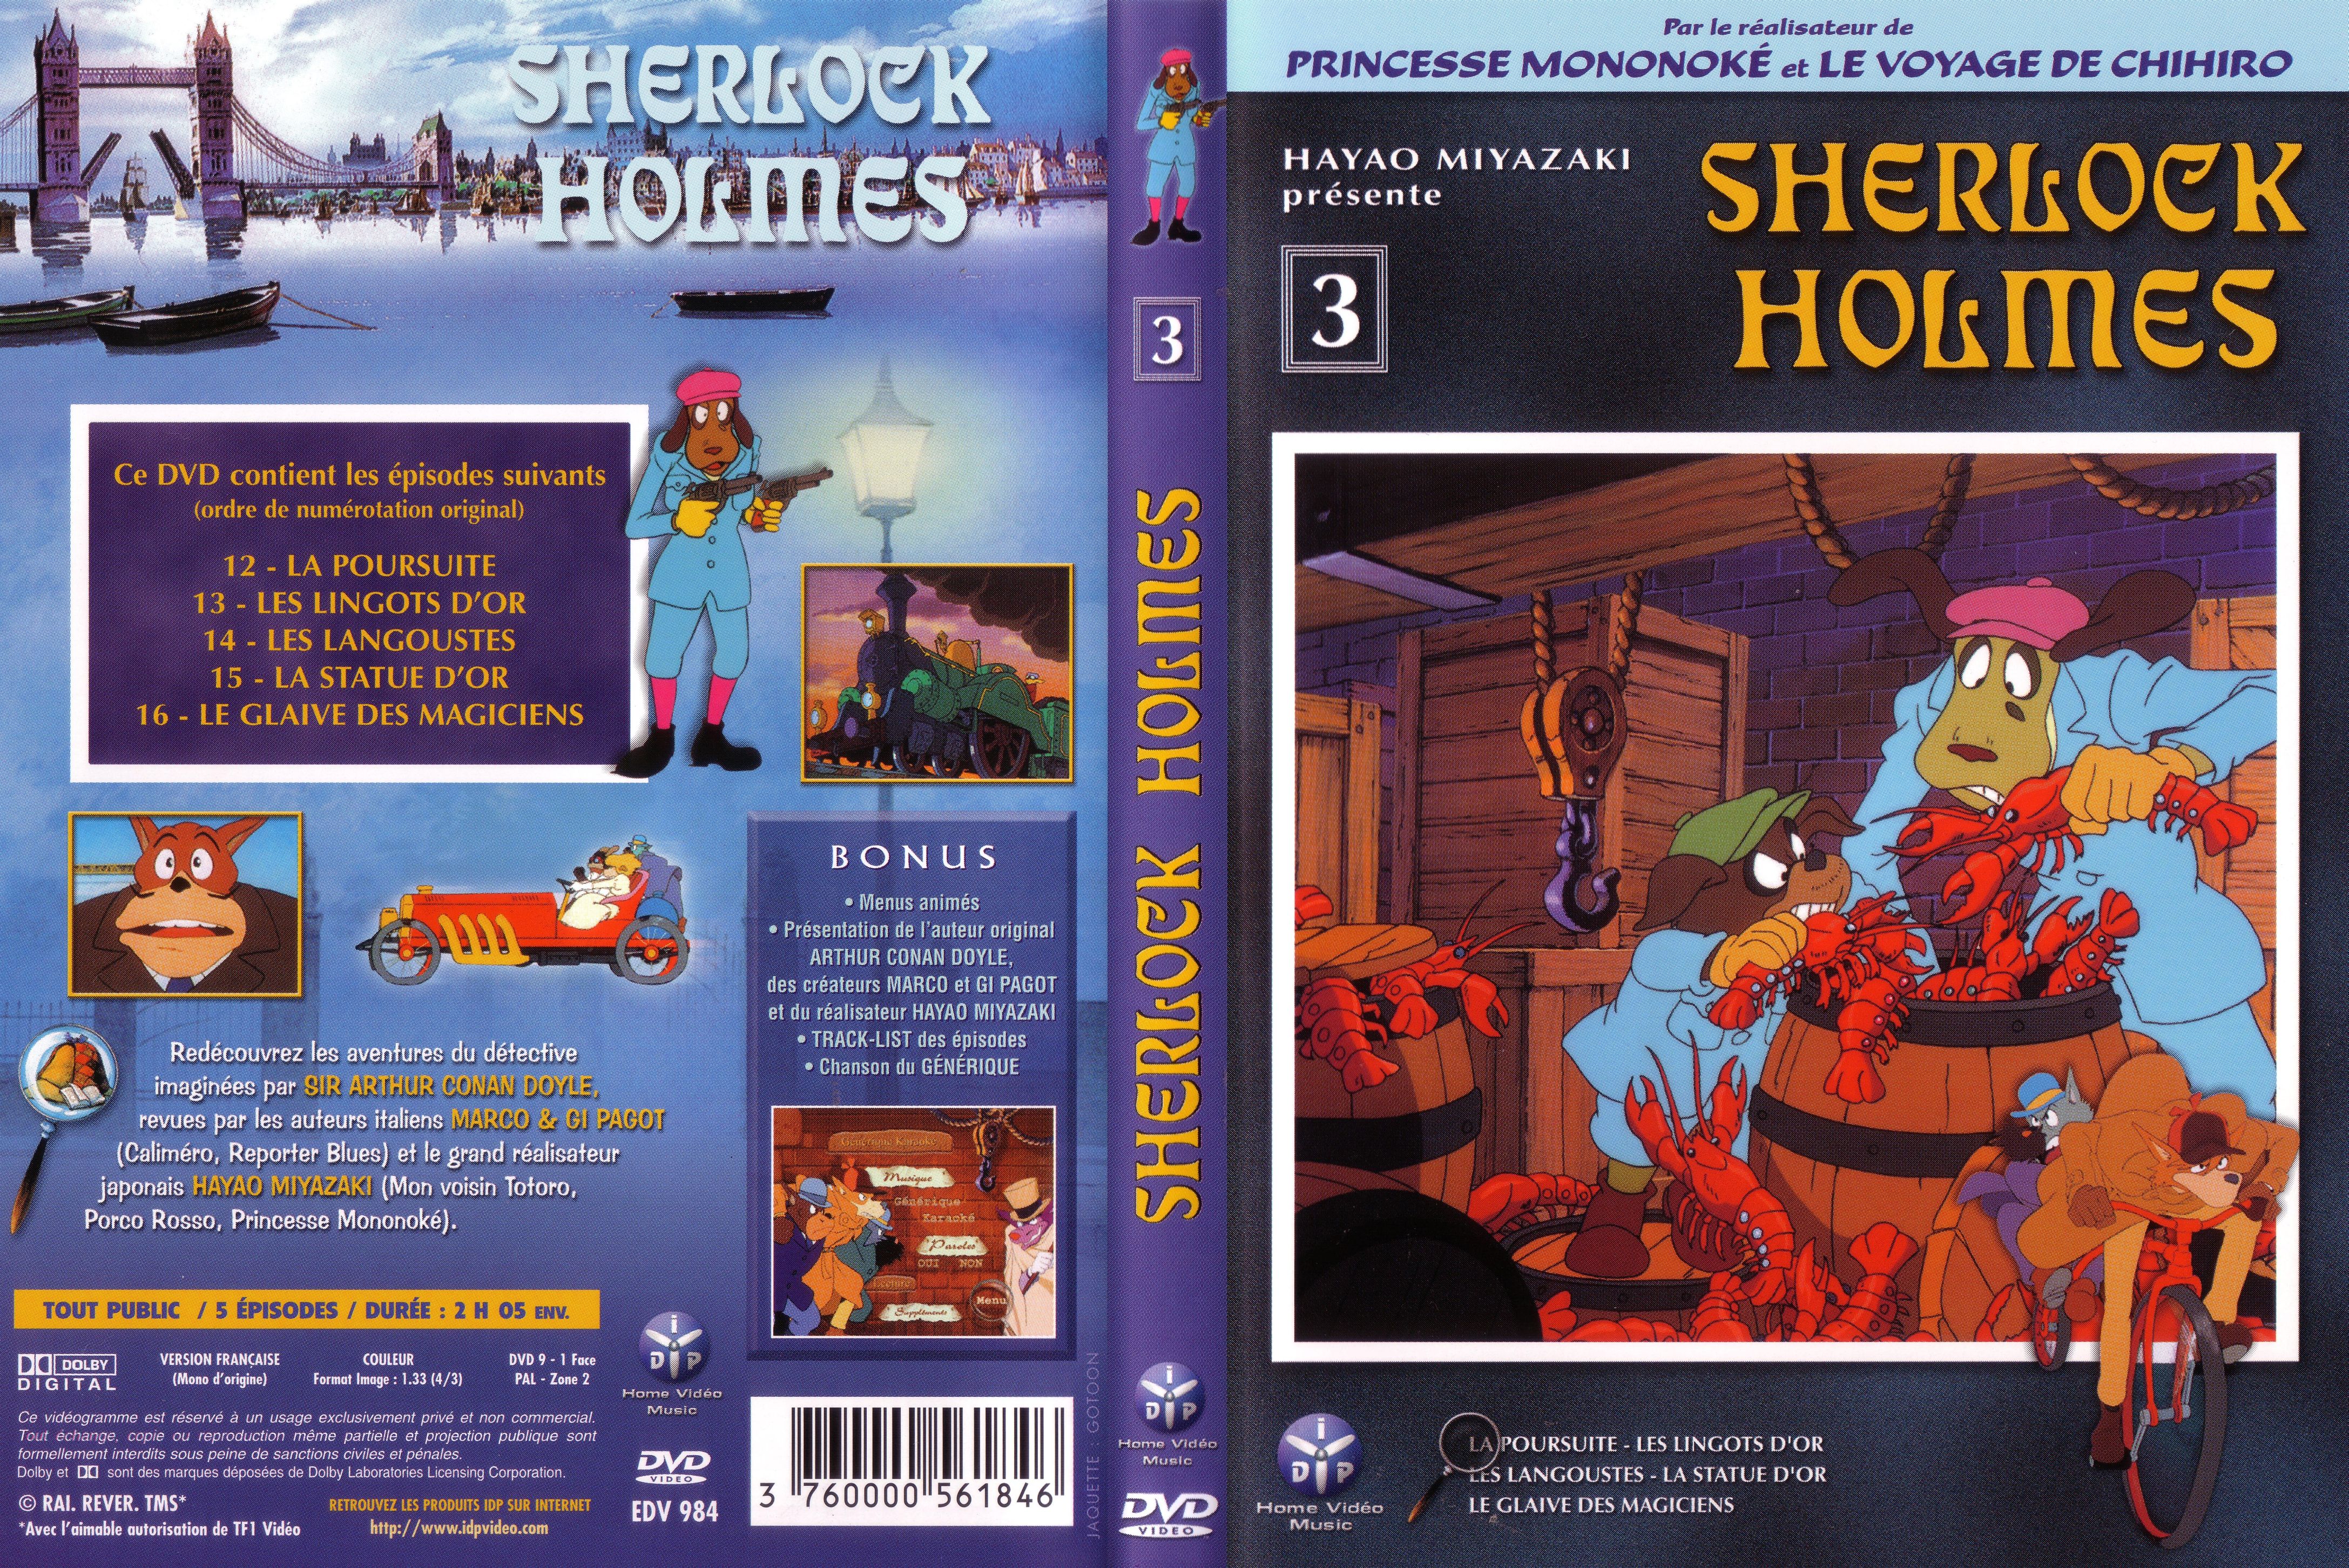 Jaquette DVD Sherlock Holmes vol 3